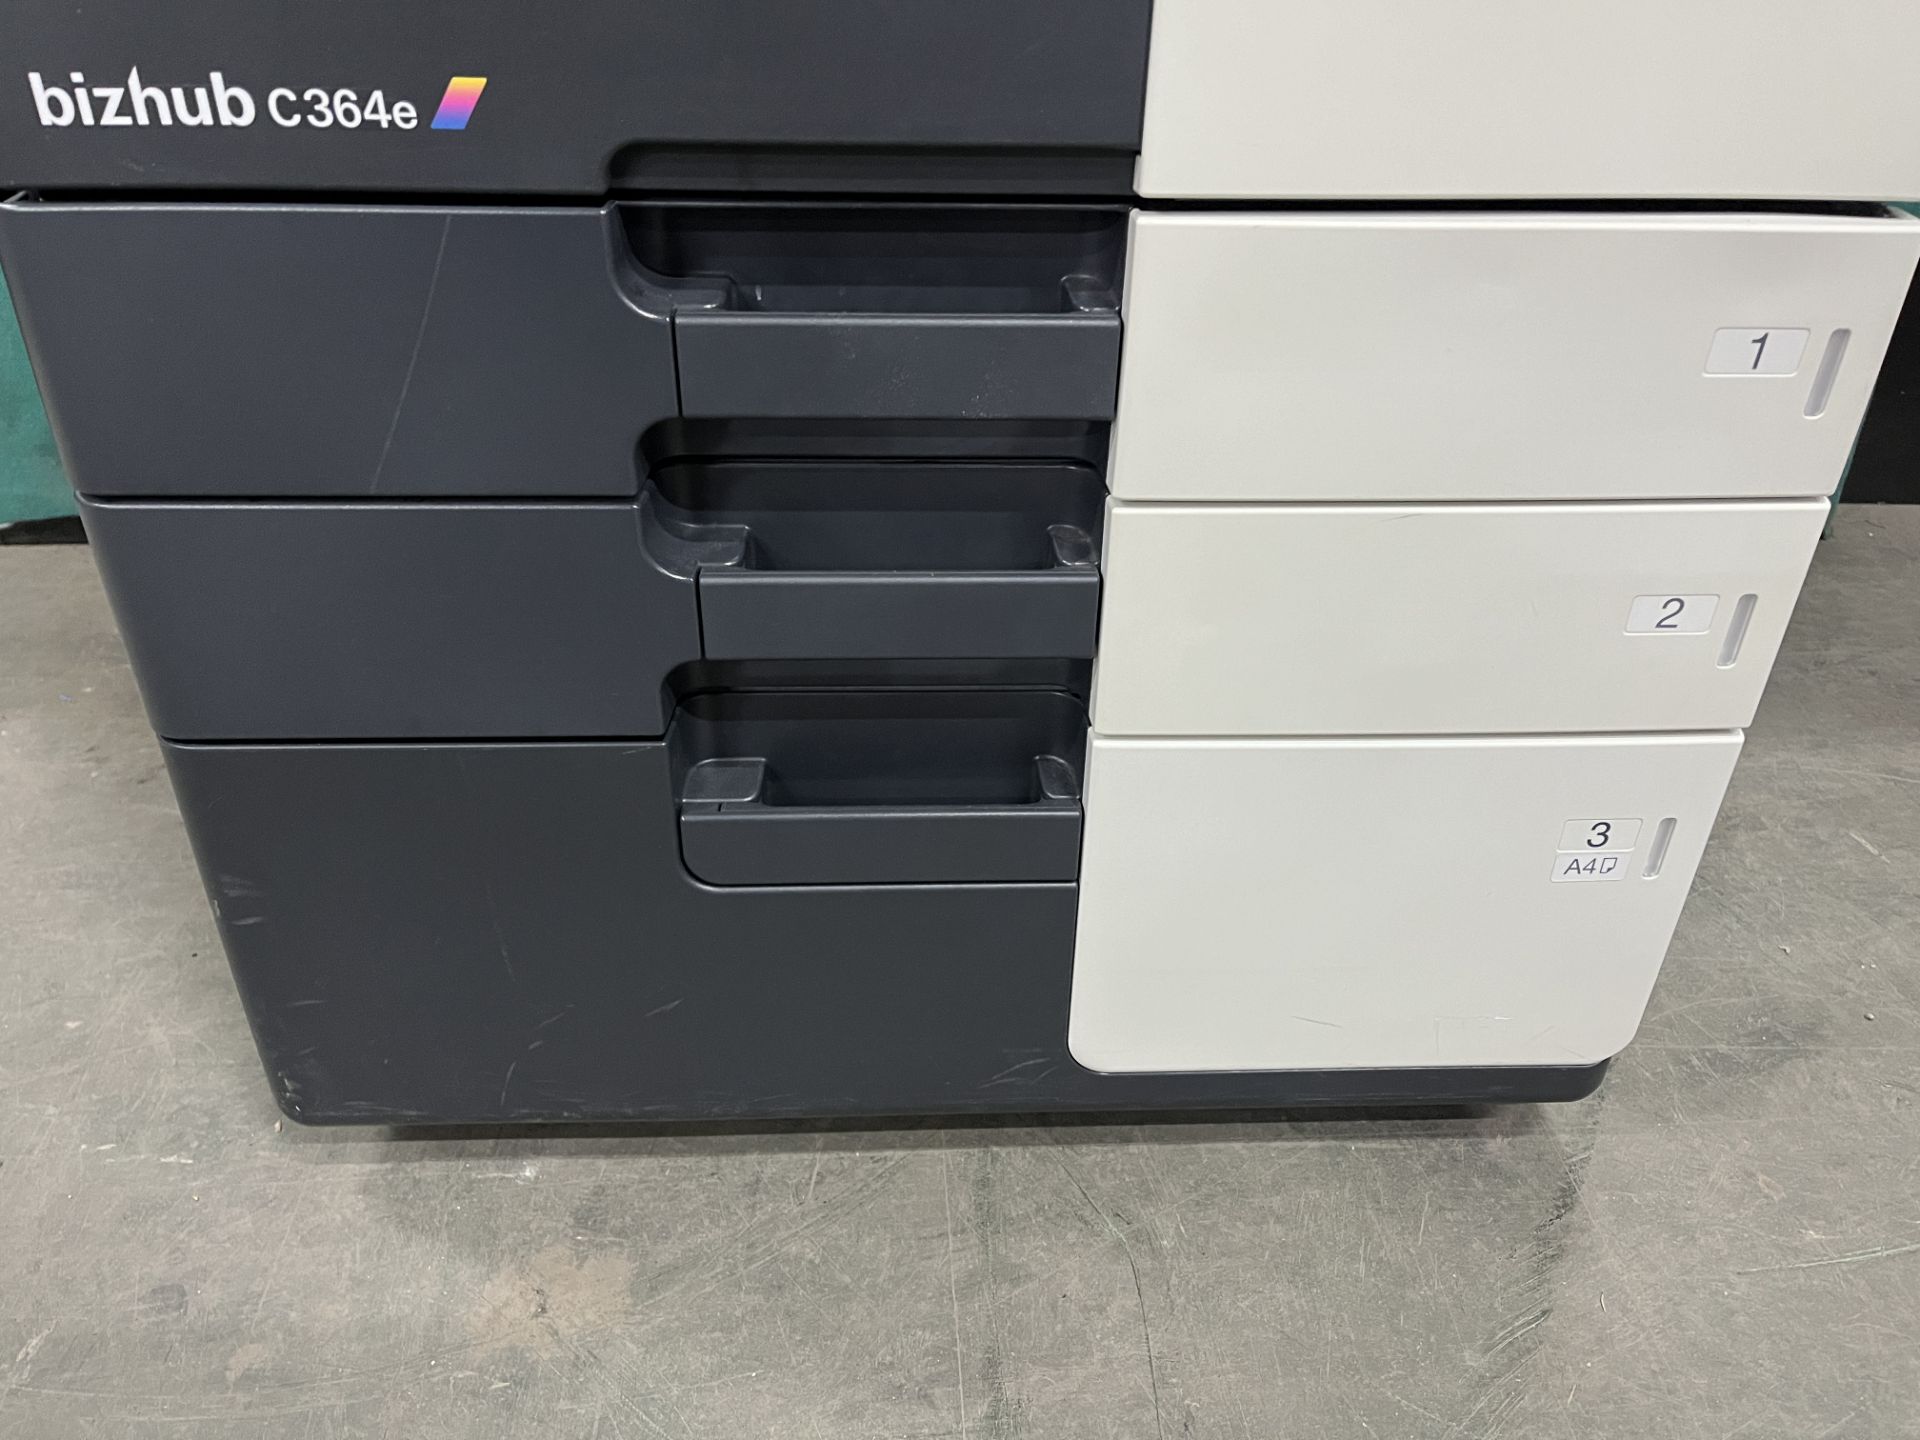 Konica Minolta Bizhub C364e A3 Multifunction Laser Printer - Image 3 of 7